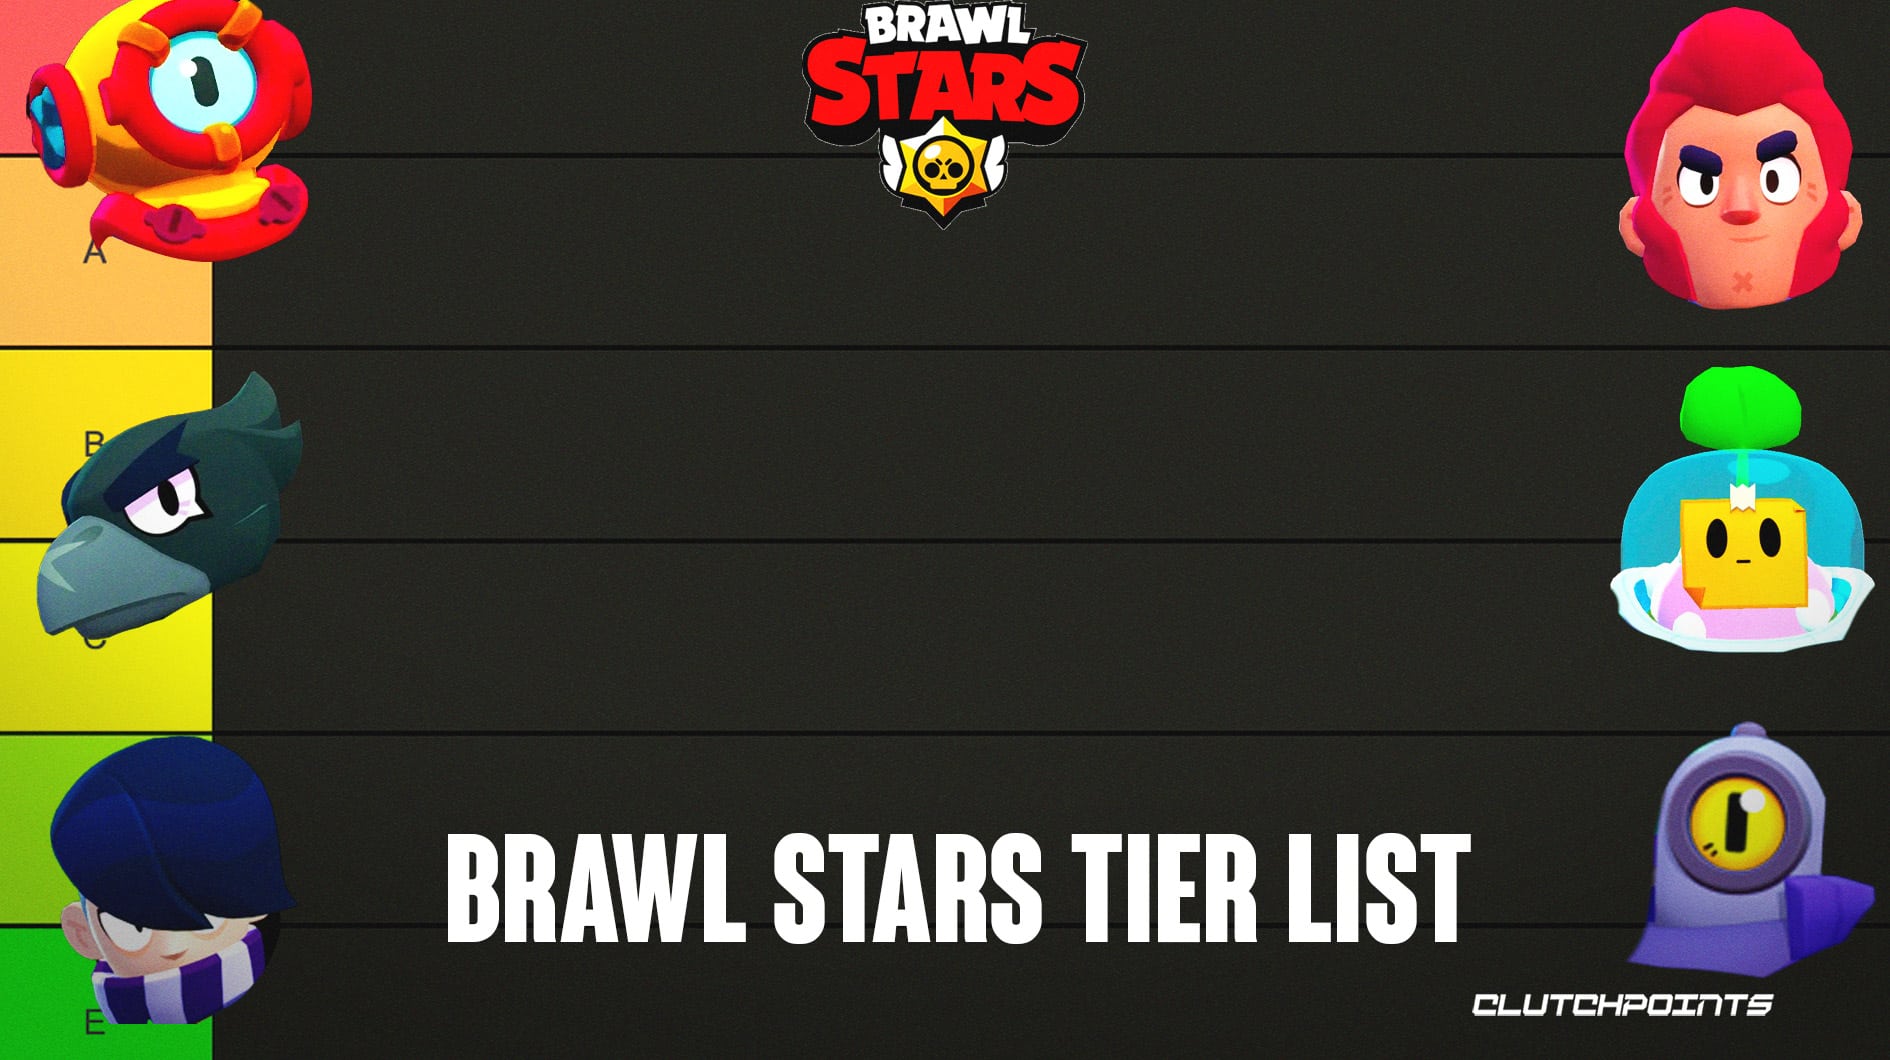 Brawl Stars: Super Rare Brawler Tier List